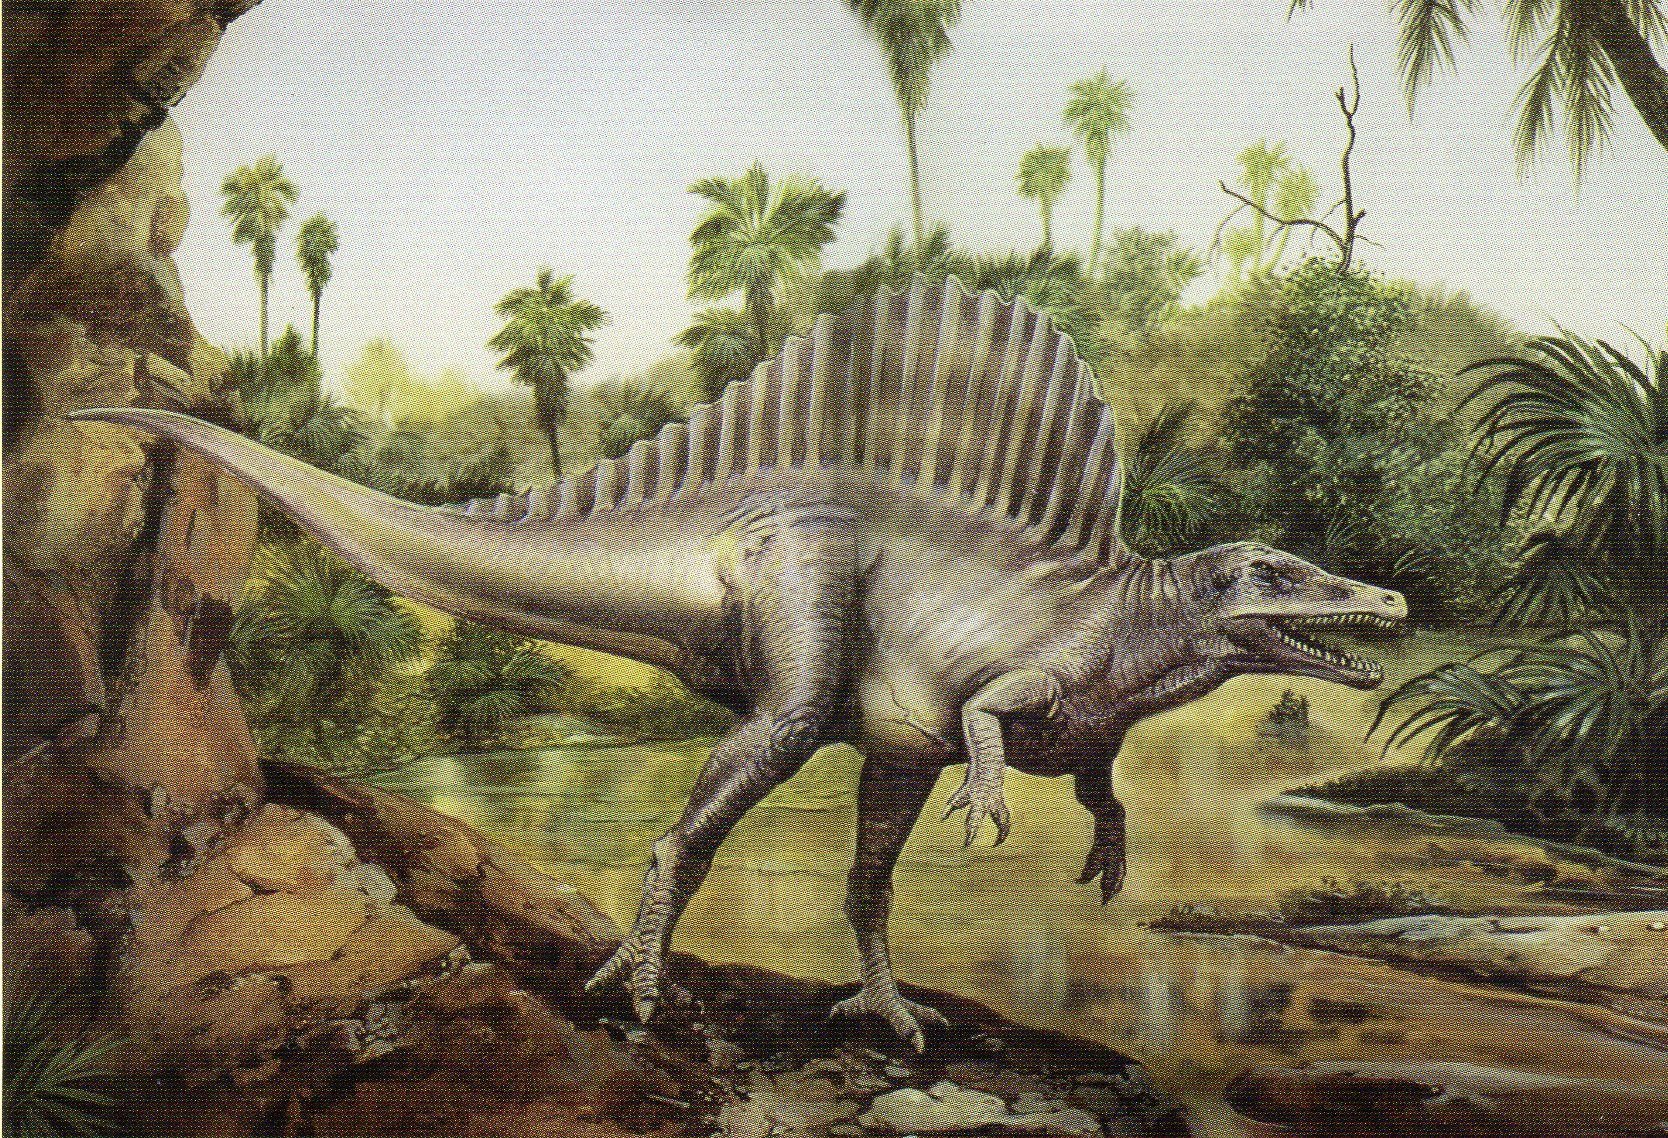 Dinosaur King Спинозавр